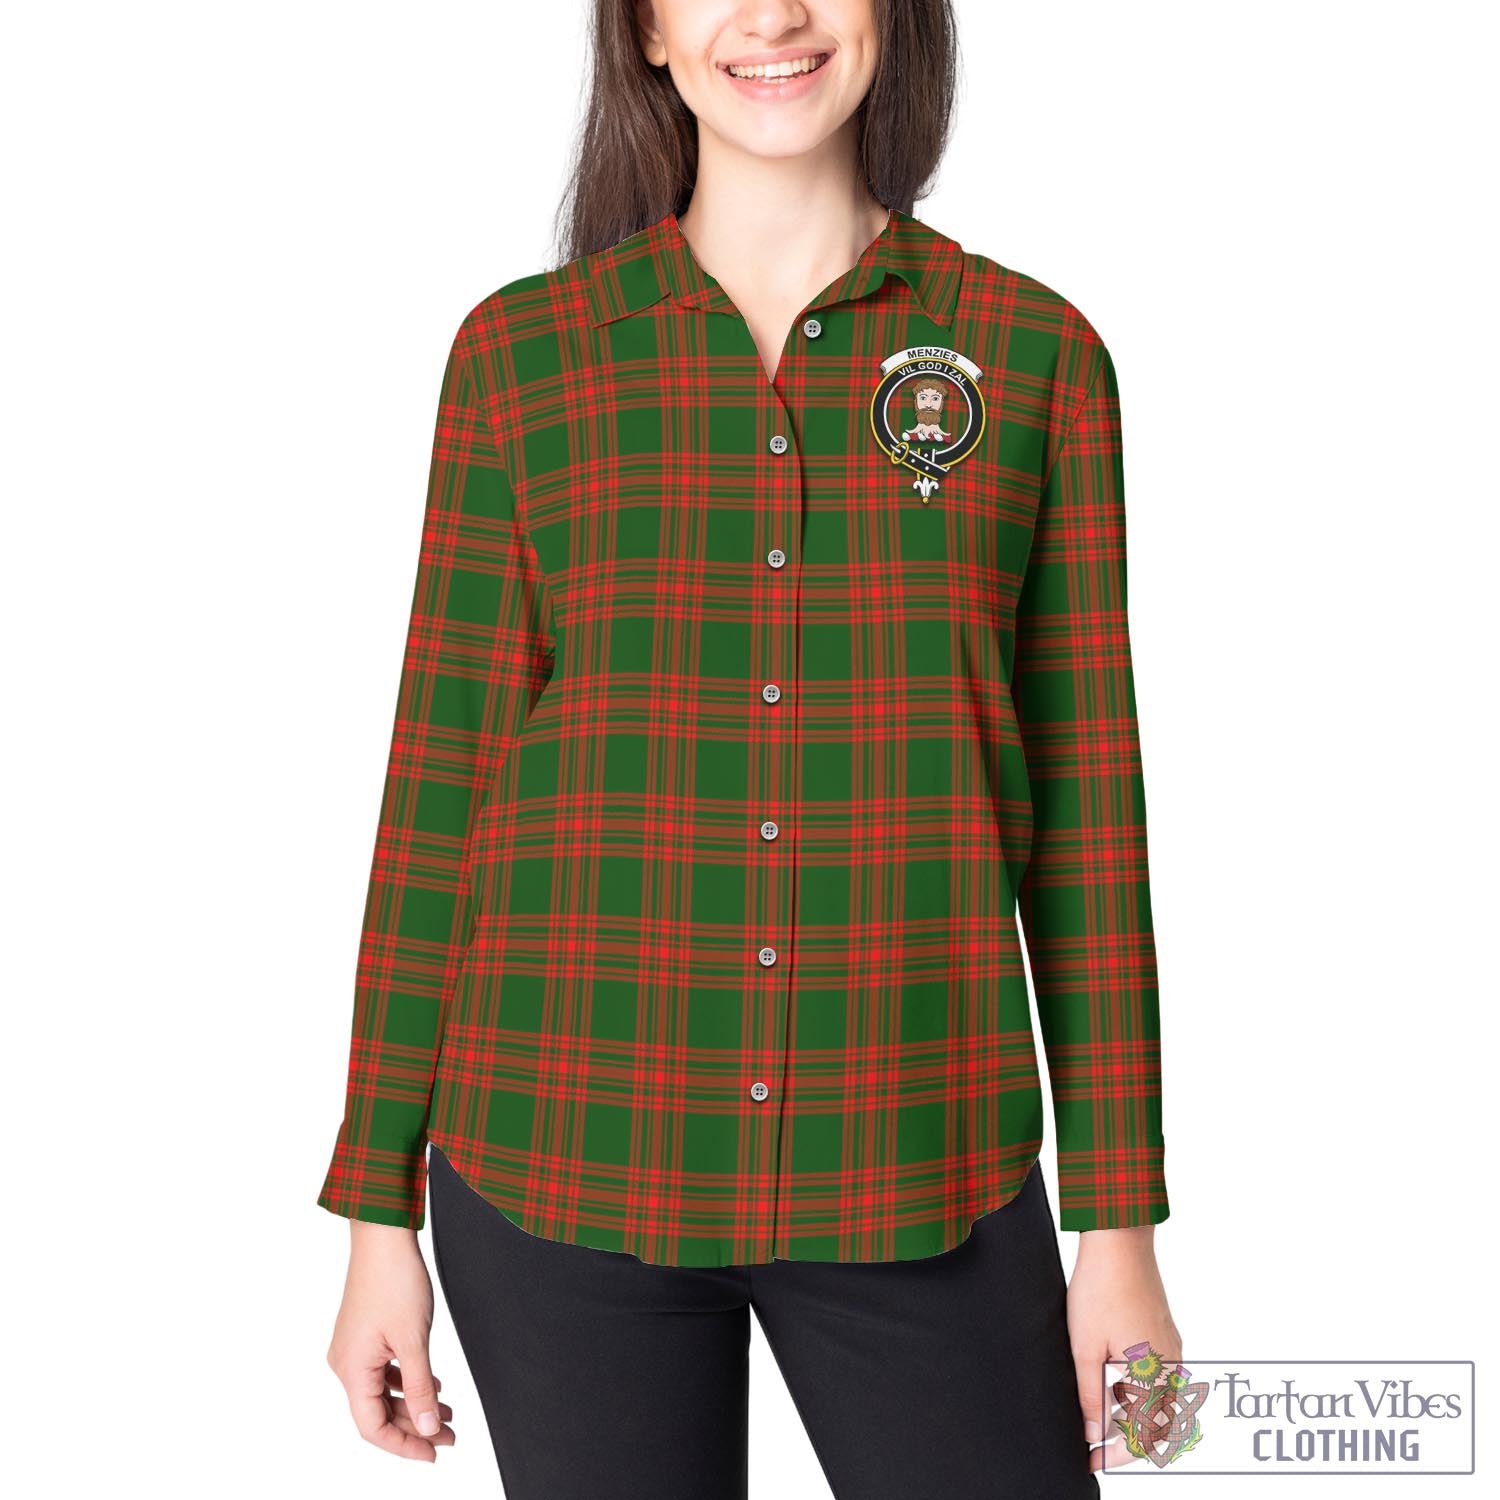 Tartan Vibes Clothing Menzies Green Modern Tartan Womens Casual Shirt with Family Crest